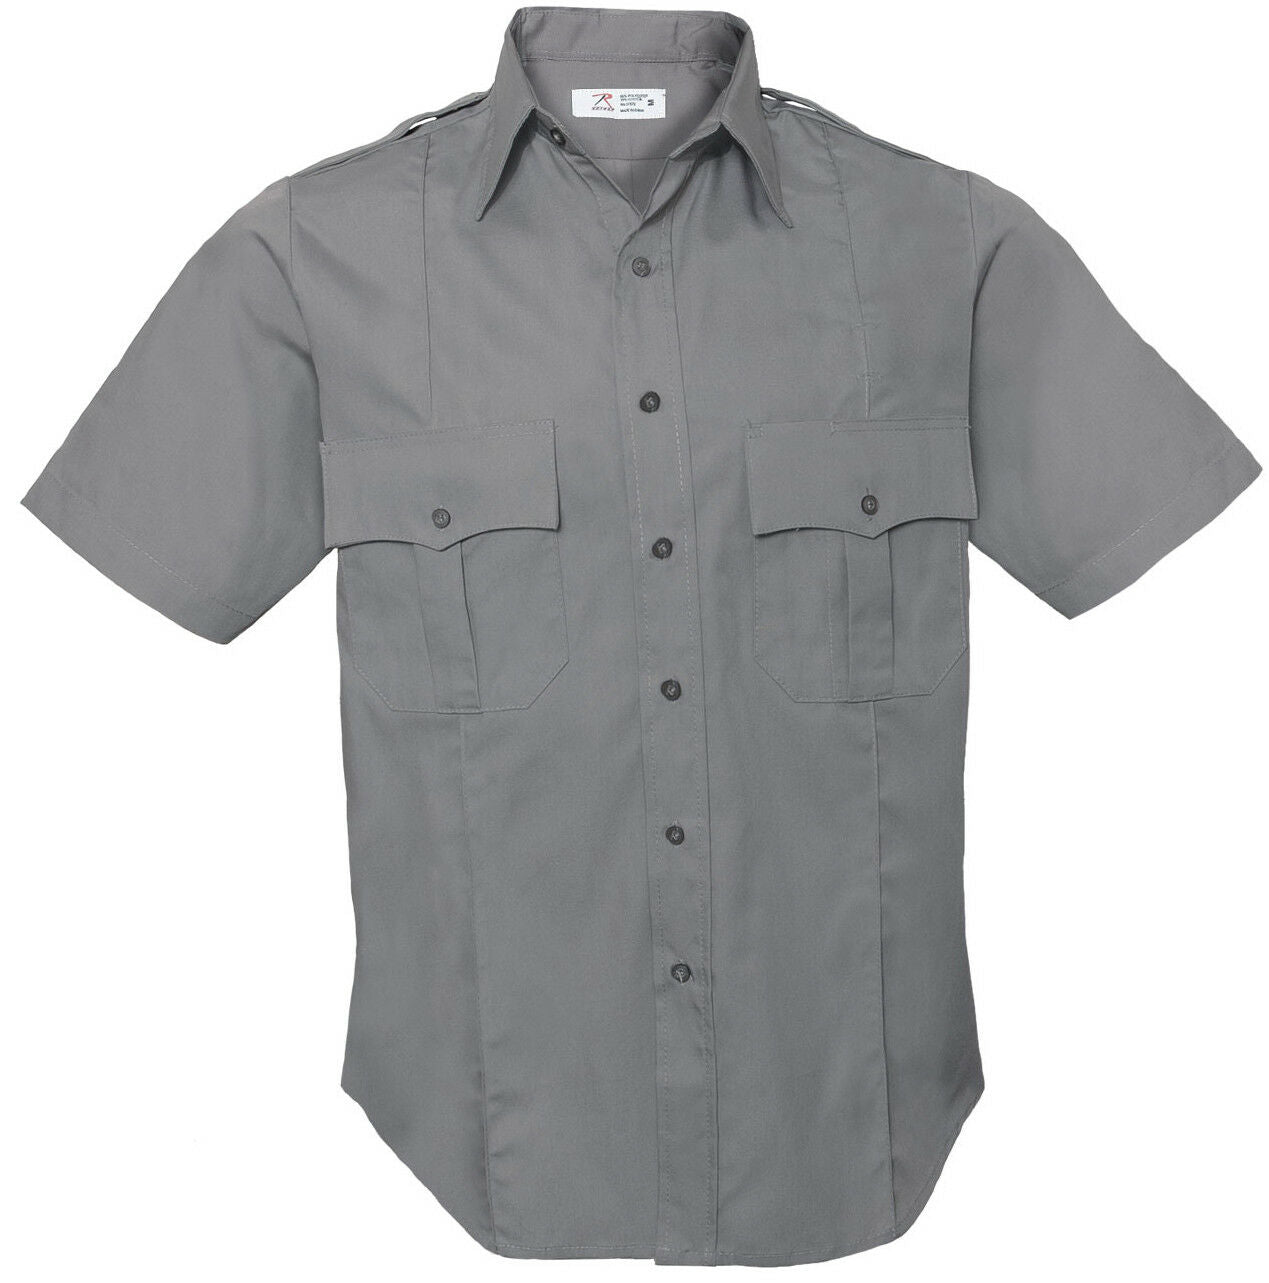 Rothco Short Sleeve Uniform Shirt